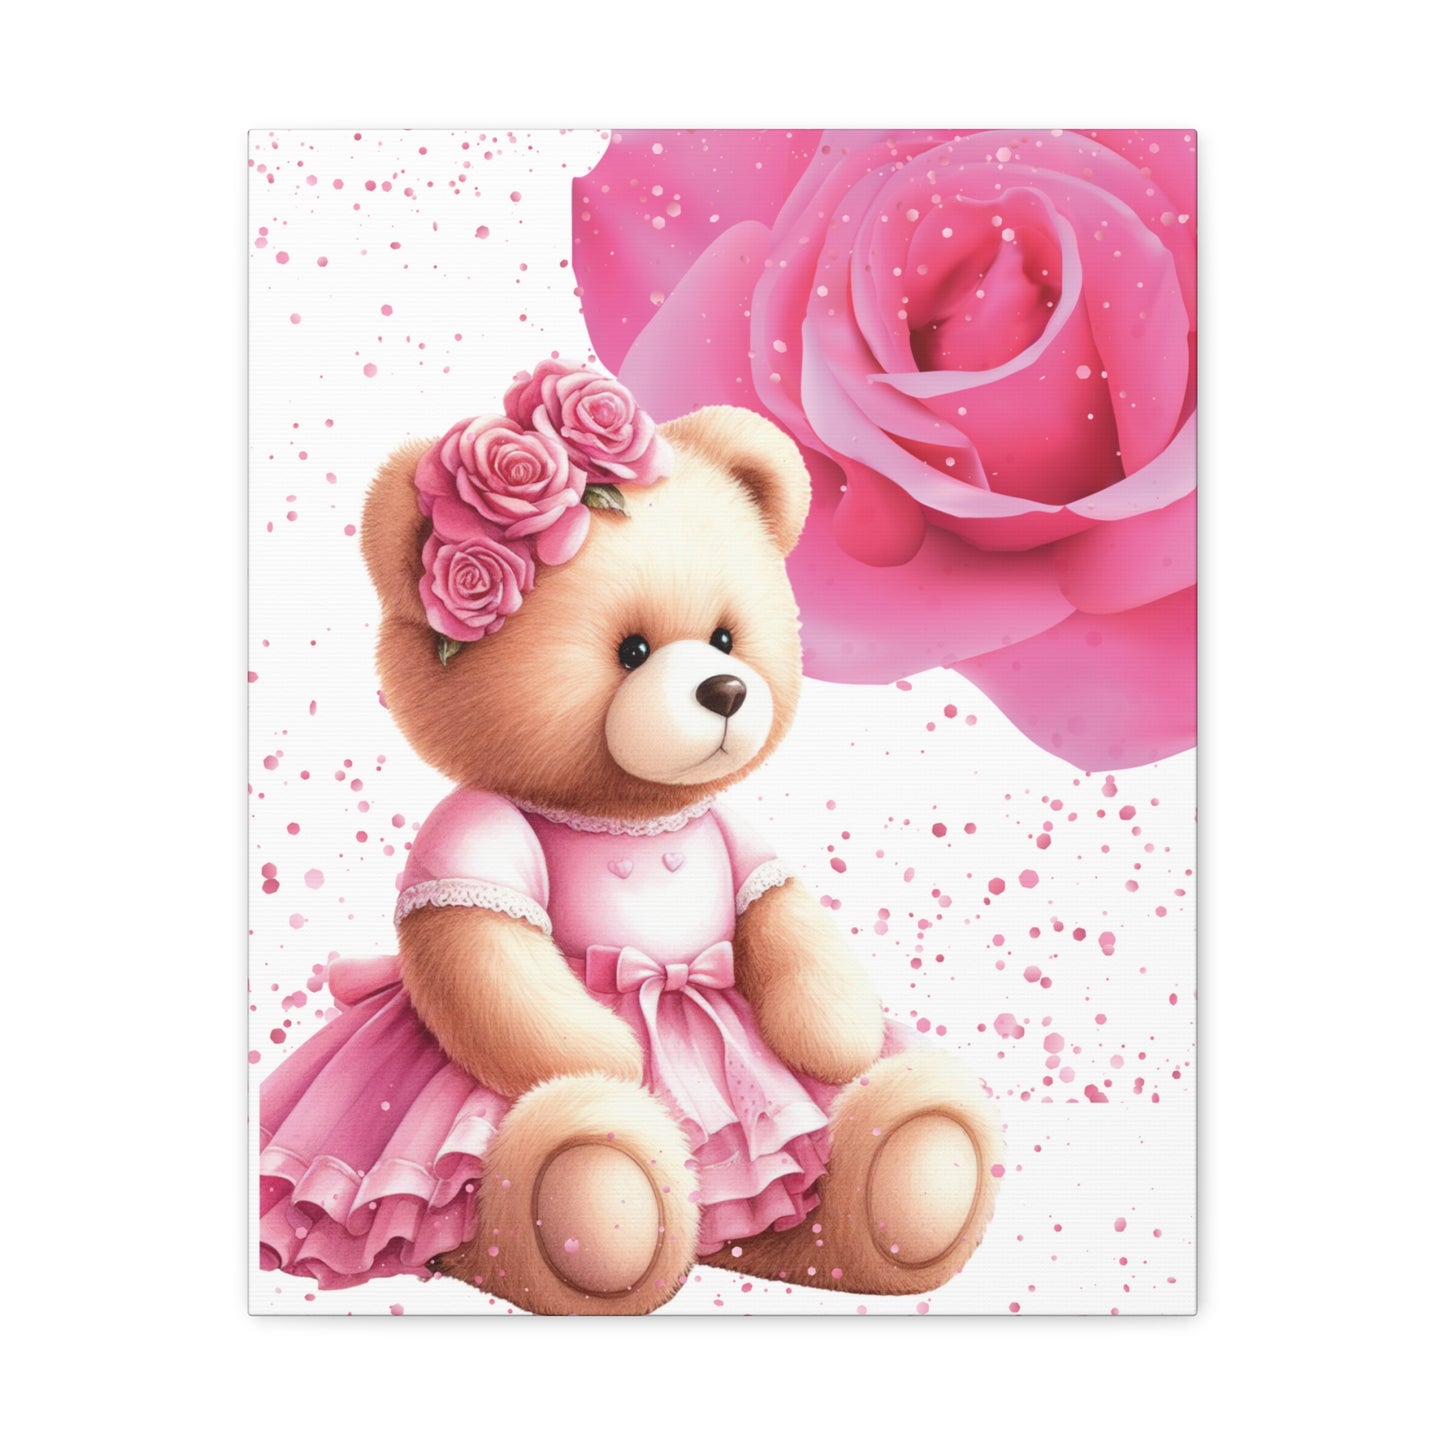 Rosie Pink Teddy Bear, Balloon Canvas Gallery Wraps, Wall Decor, Home Decor, Office Decor, Room Decor